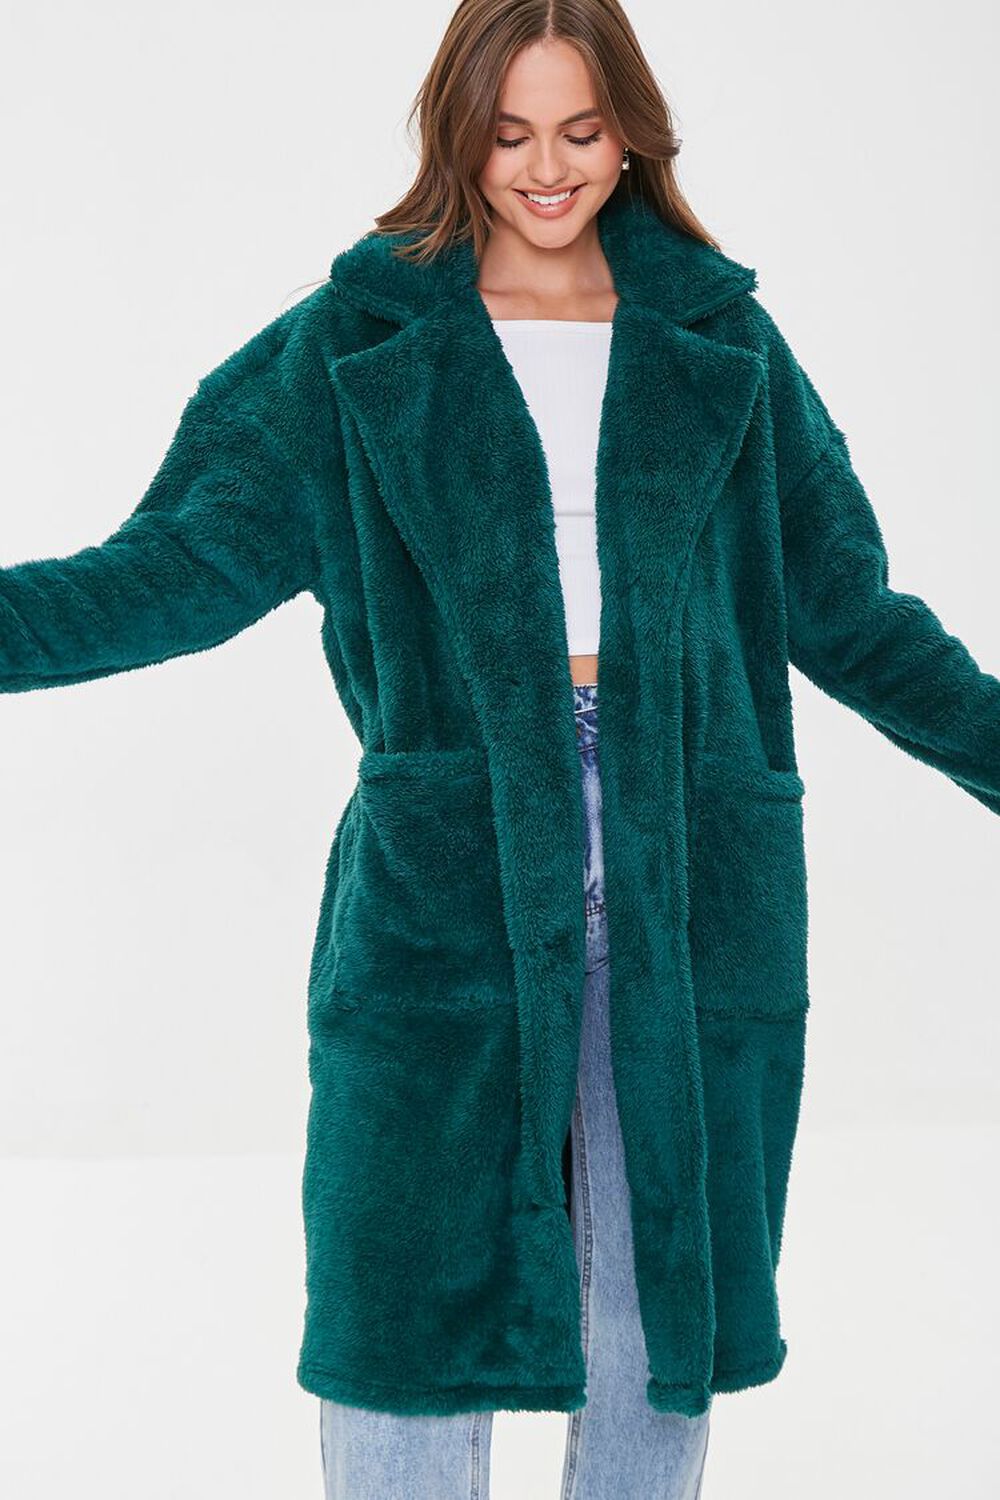 HUNTER GREEN Faux Fur Teddy Coat, image 1